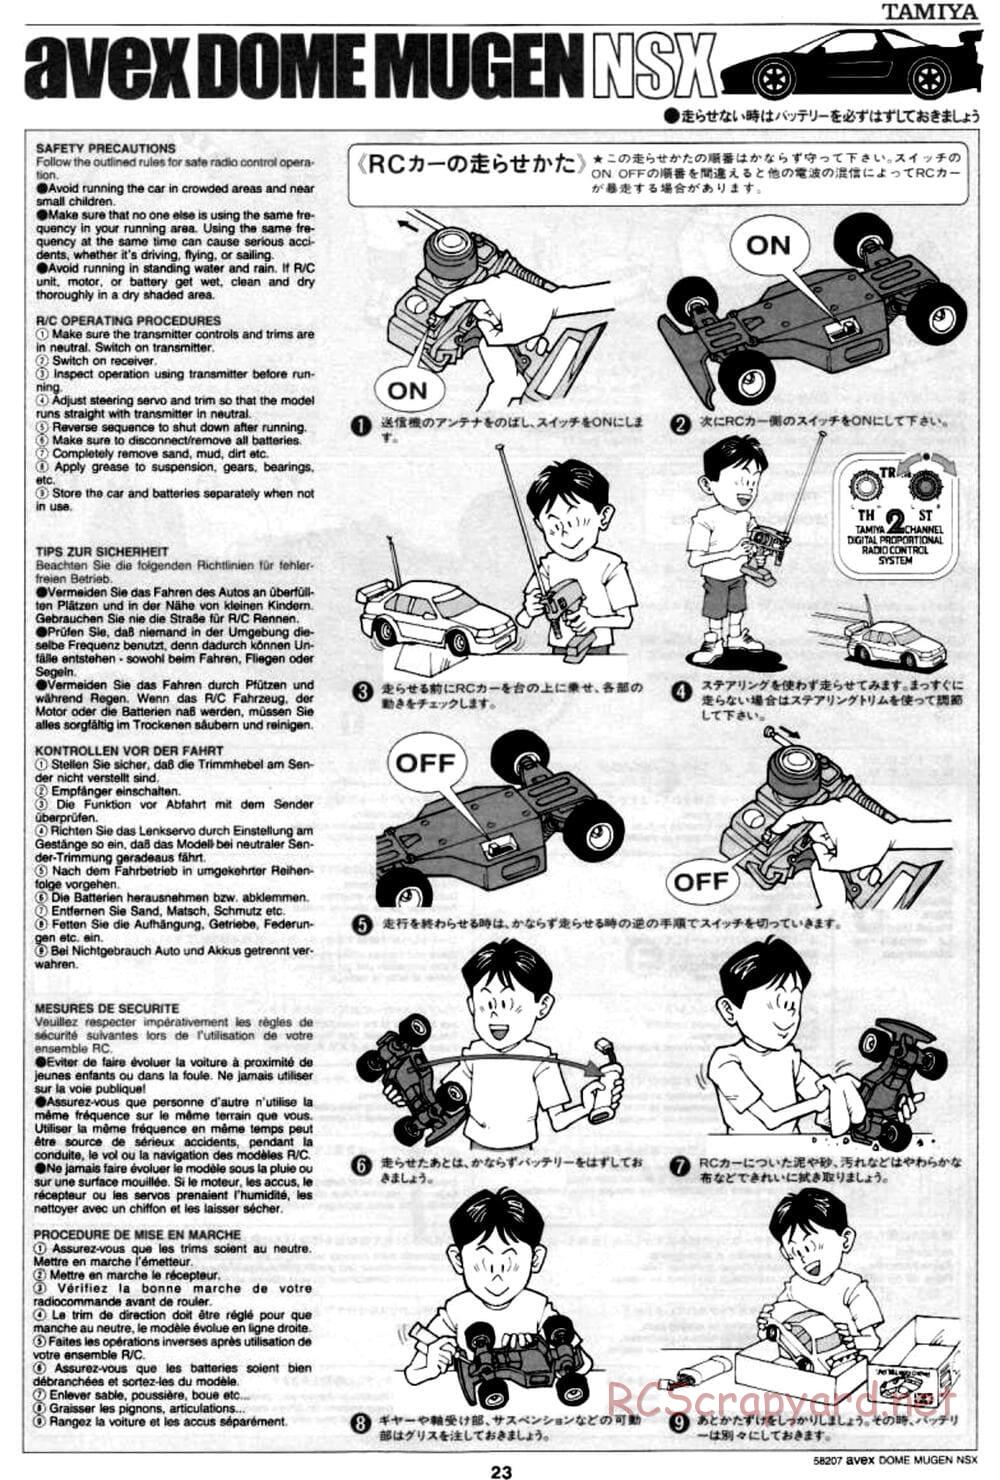 Tamiya - Avex Dome Mugen NSX - TA-03R Chassis - Manual - Page 23